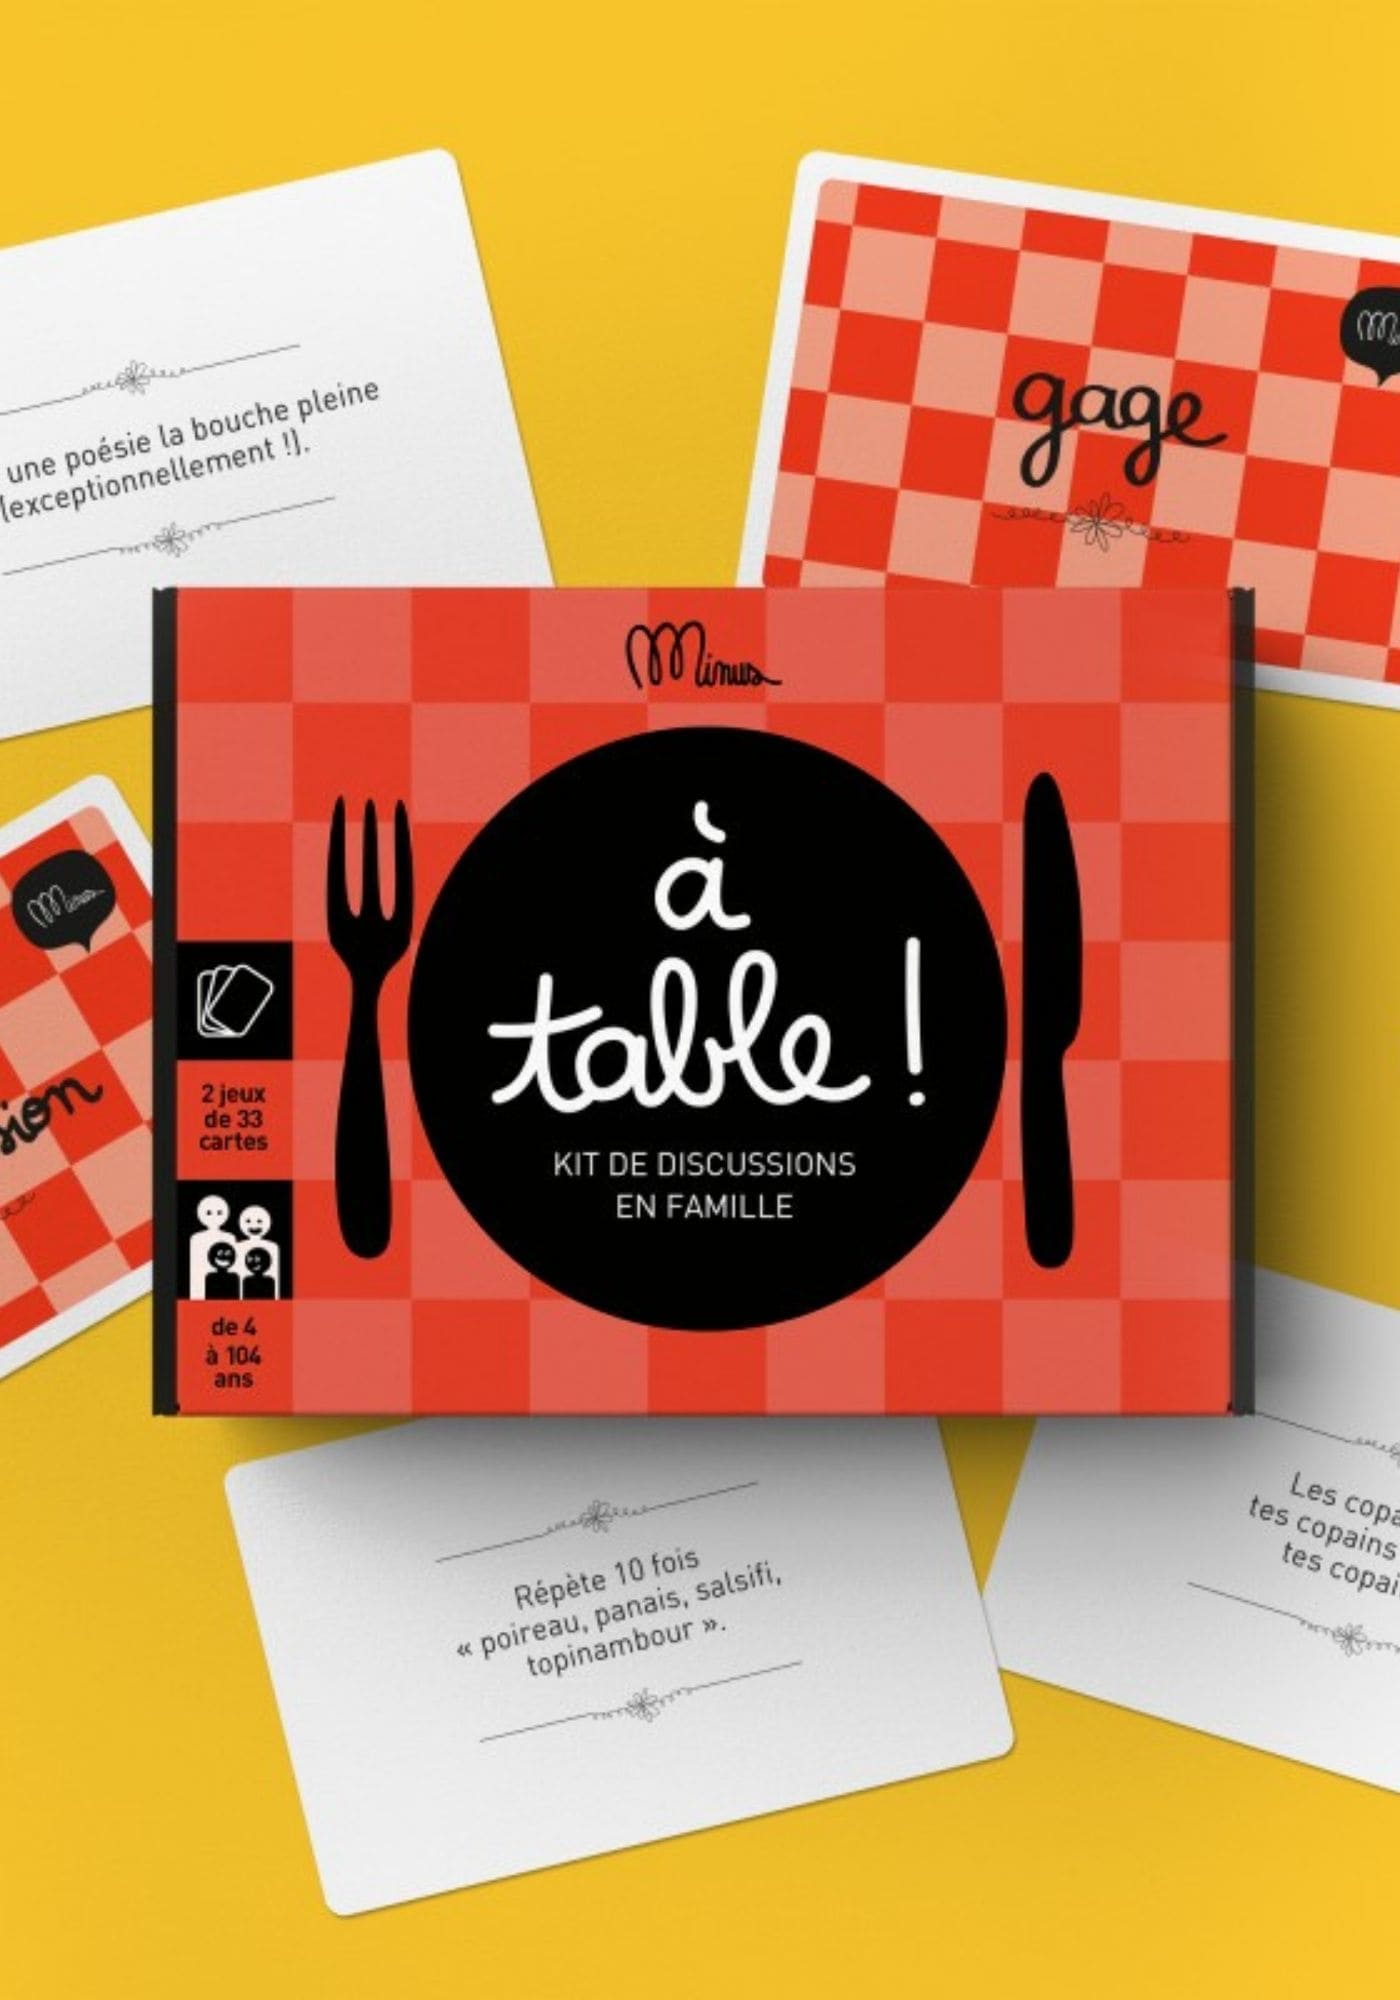 minus-editions-kit-discussion-a-table-jeu-cartes-repas